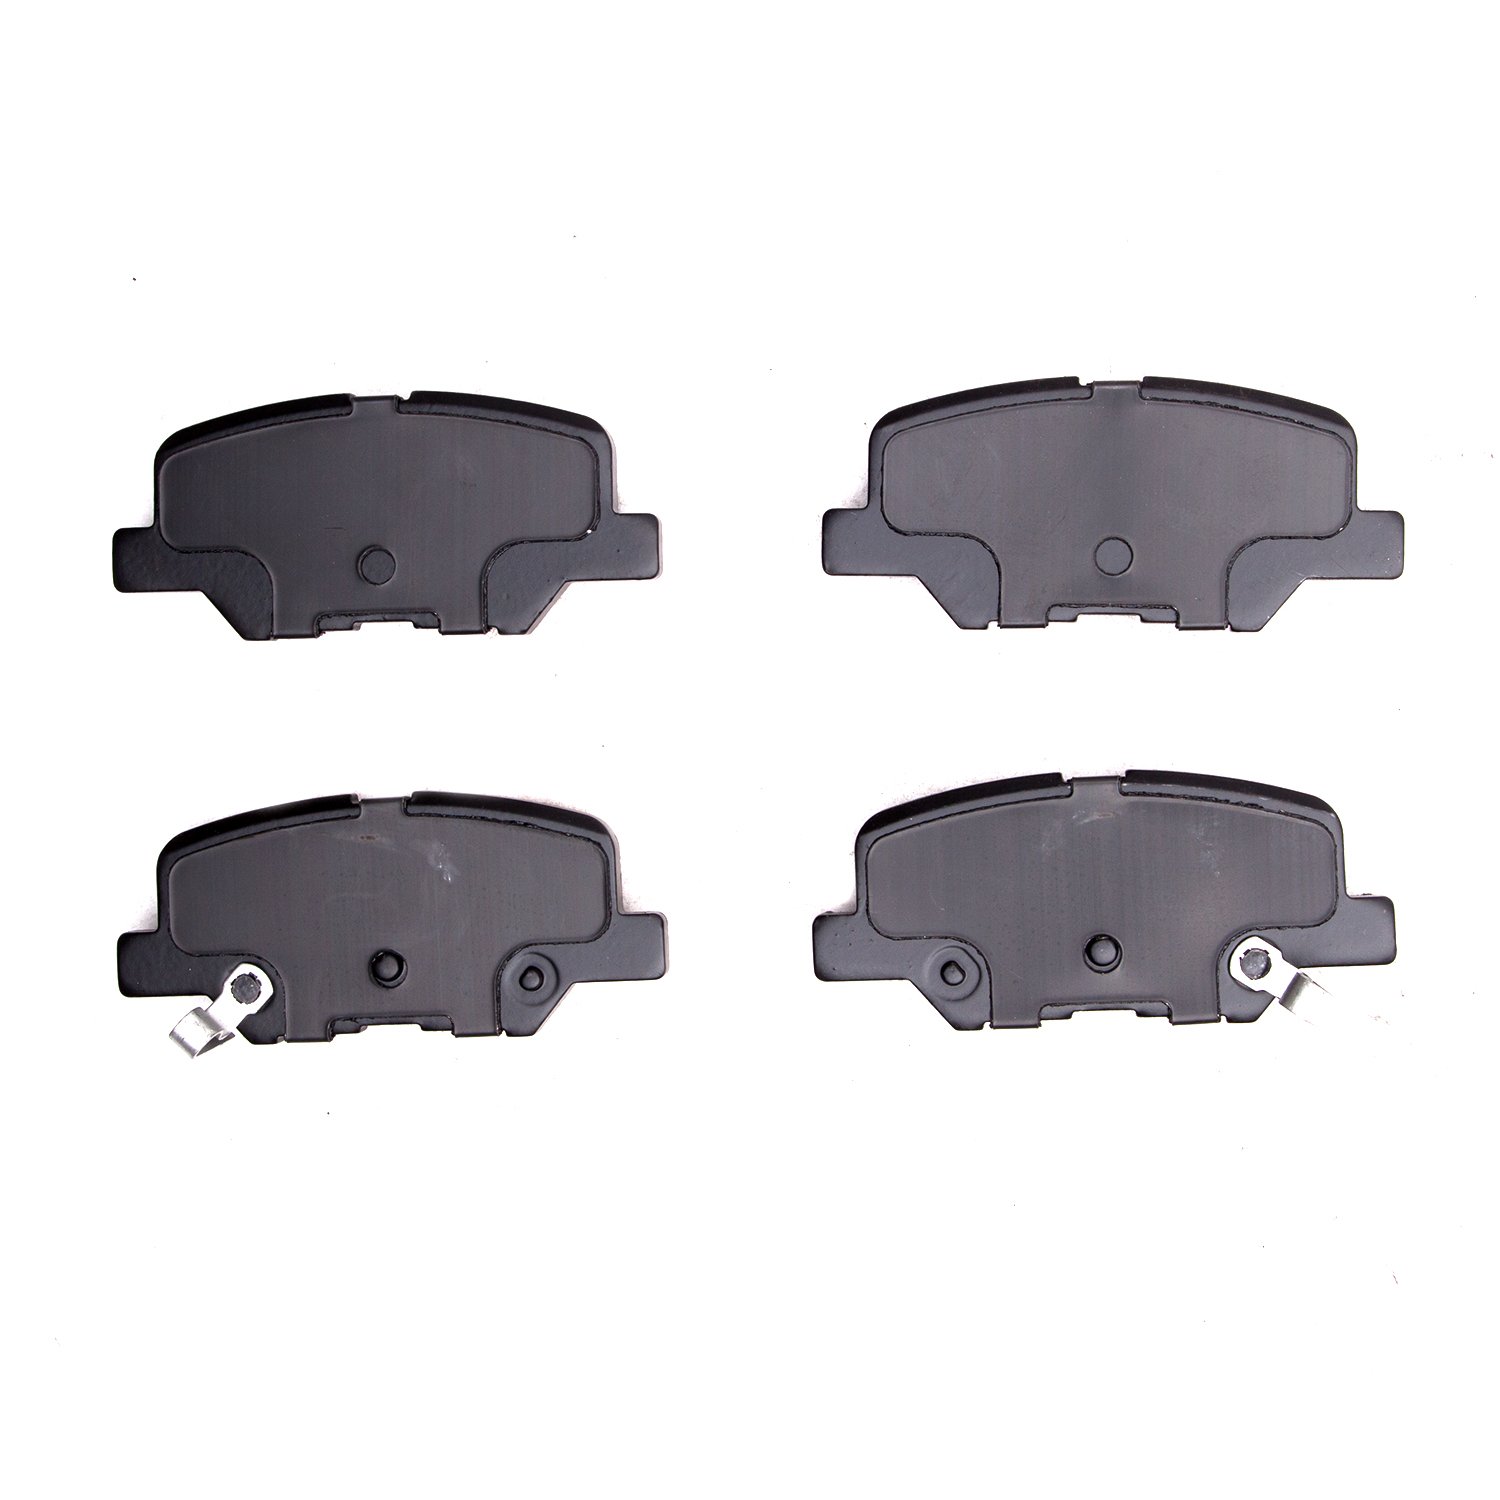 1311-1679-00 3000-Series Semi-Metallic Brake Pads, Fits Select Multiple Makes/Models, Position: Rear